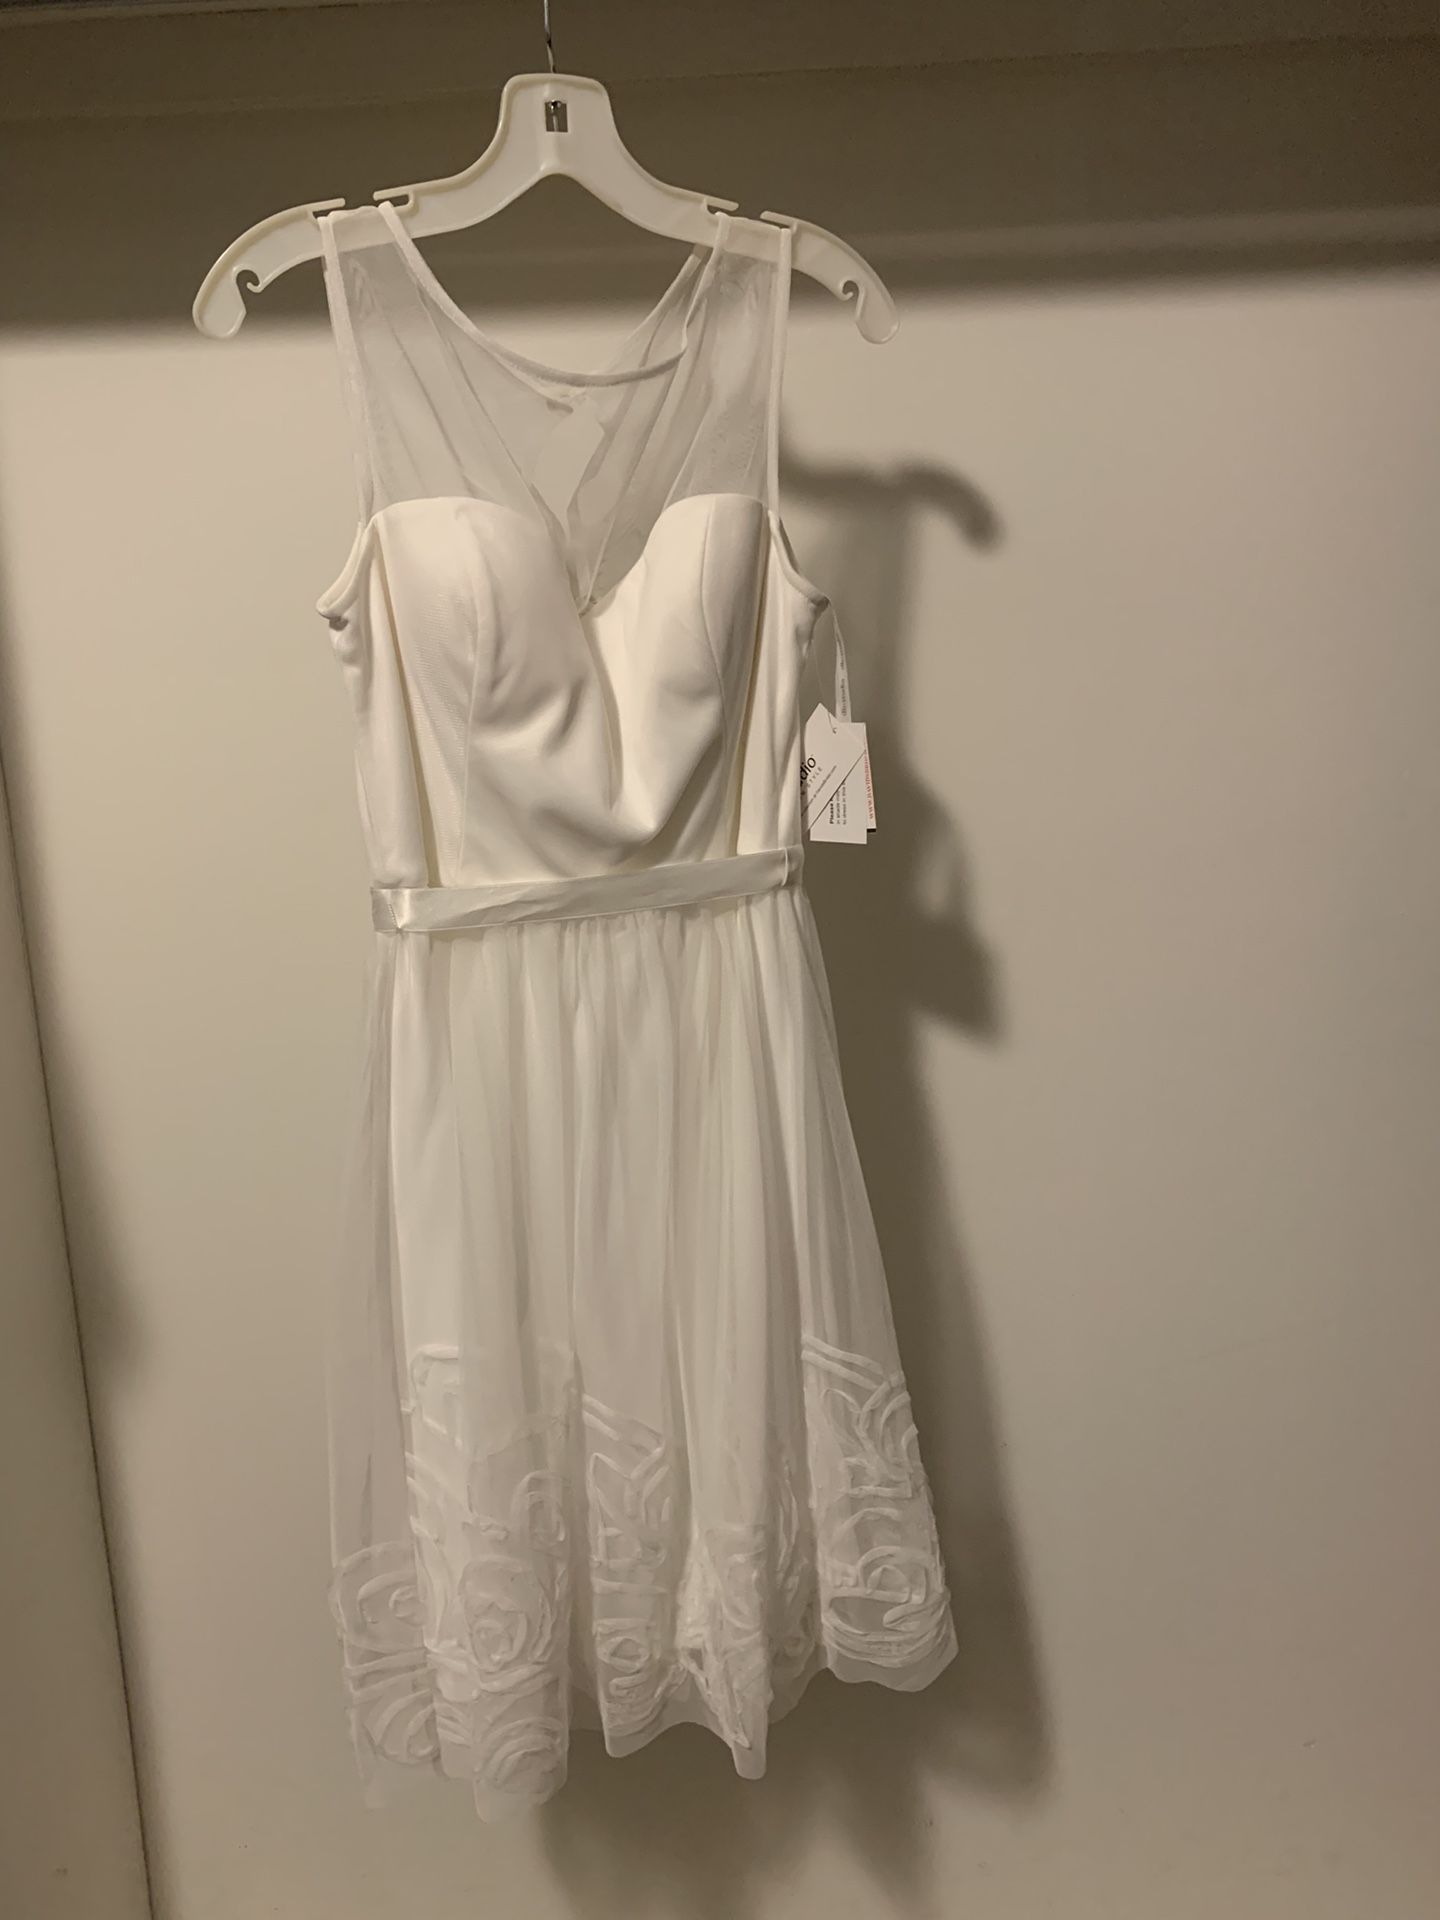 David’s bridal wedding dress